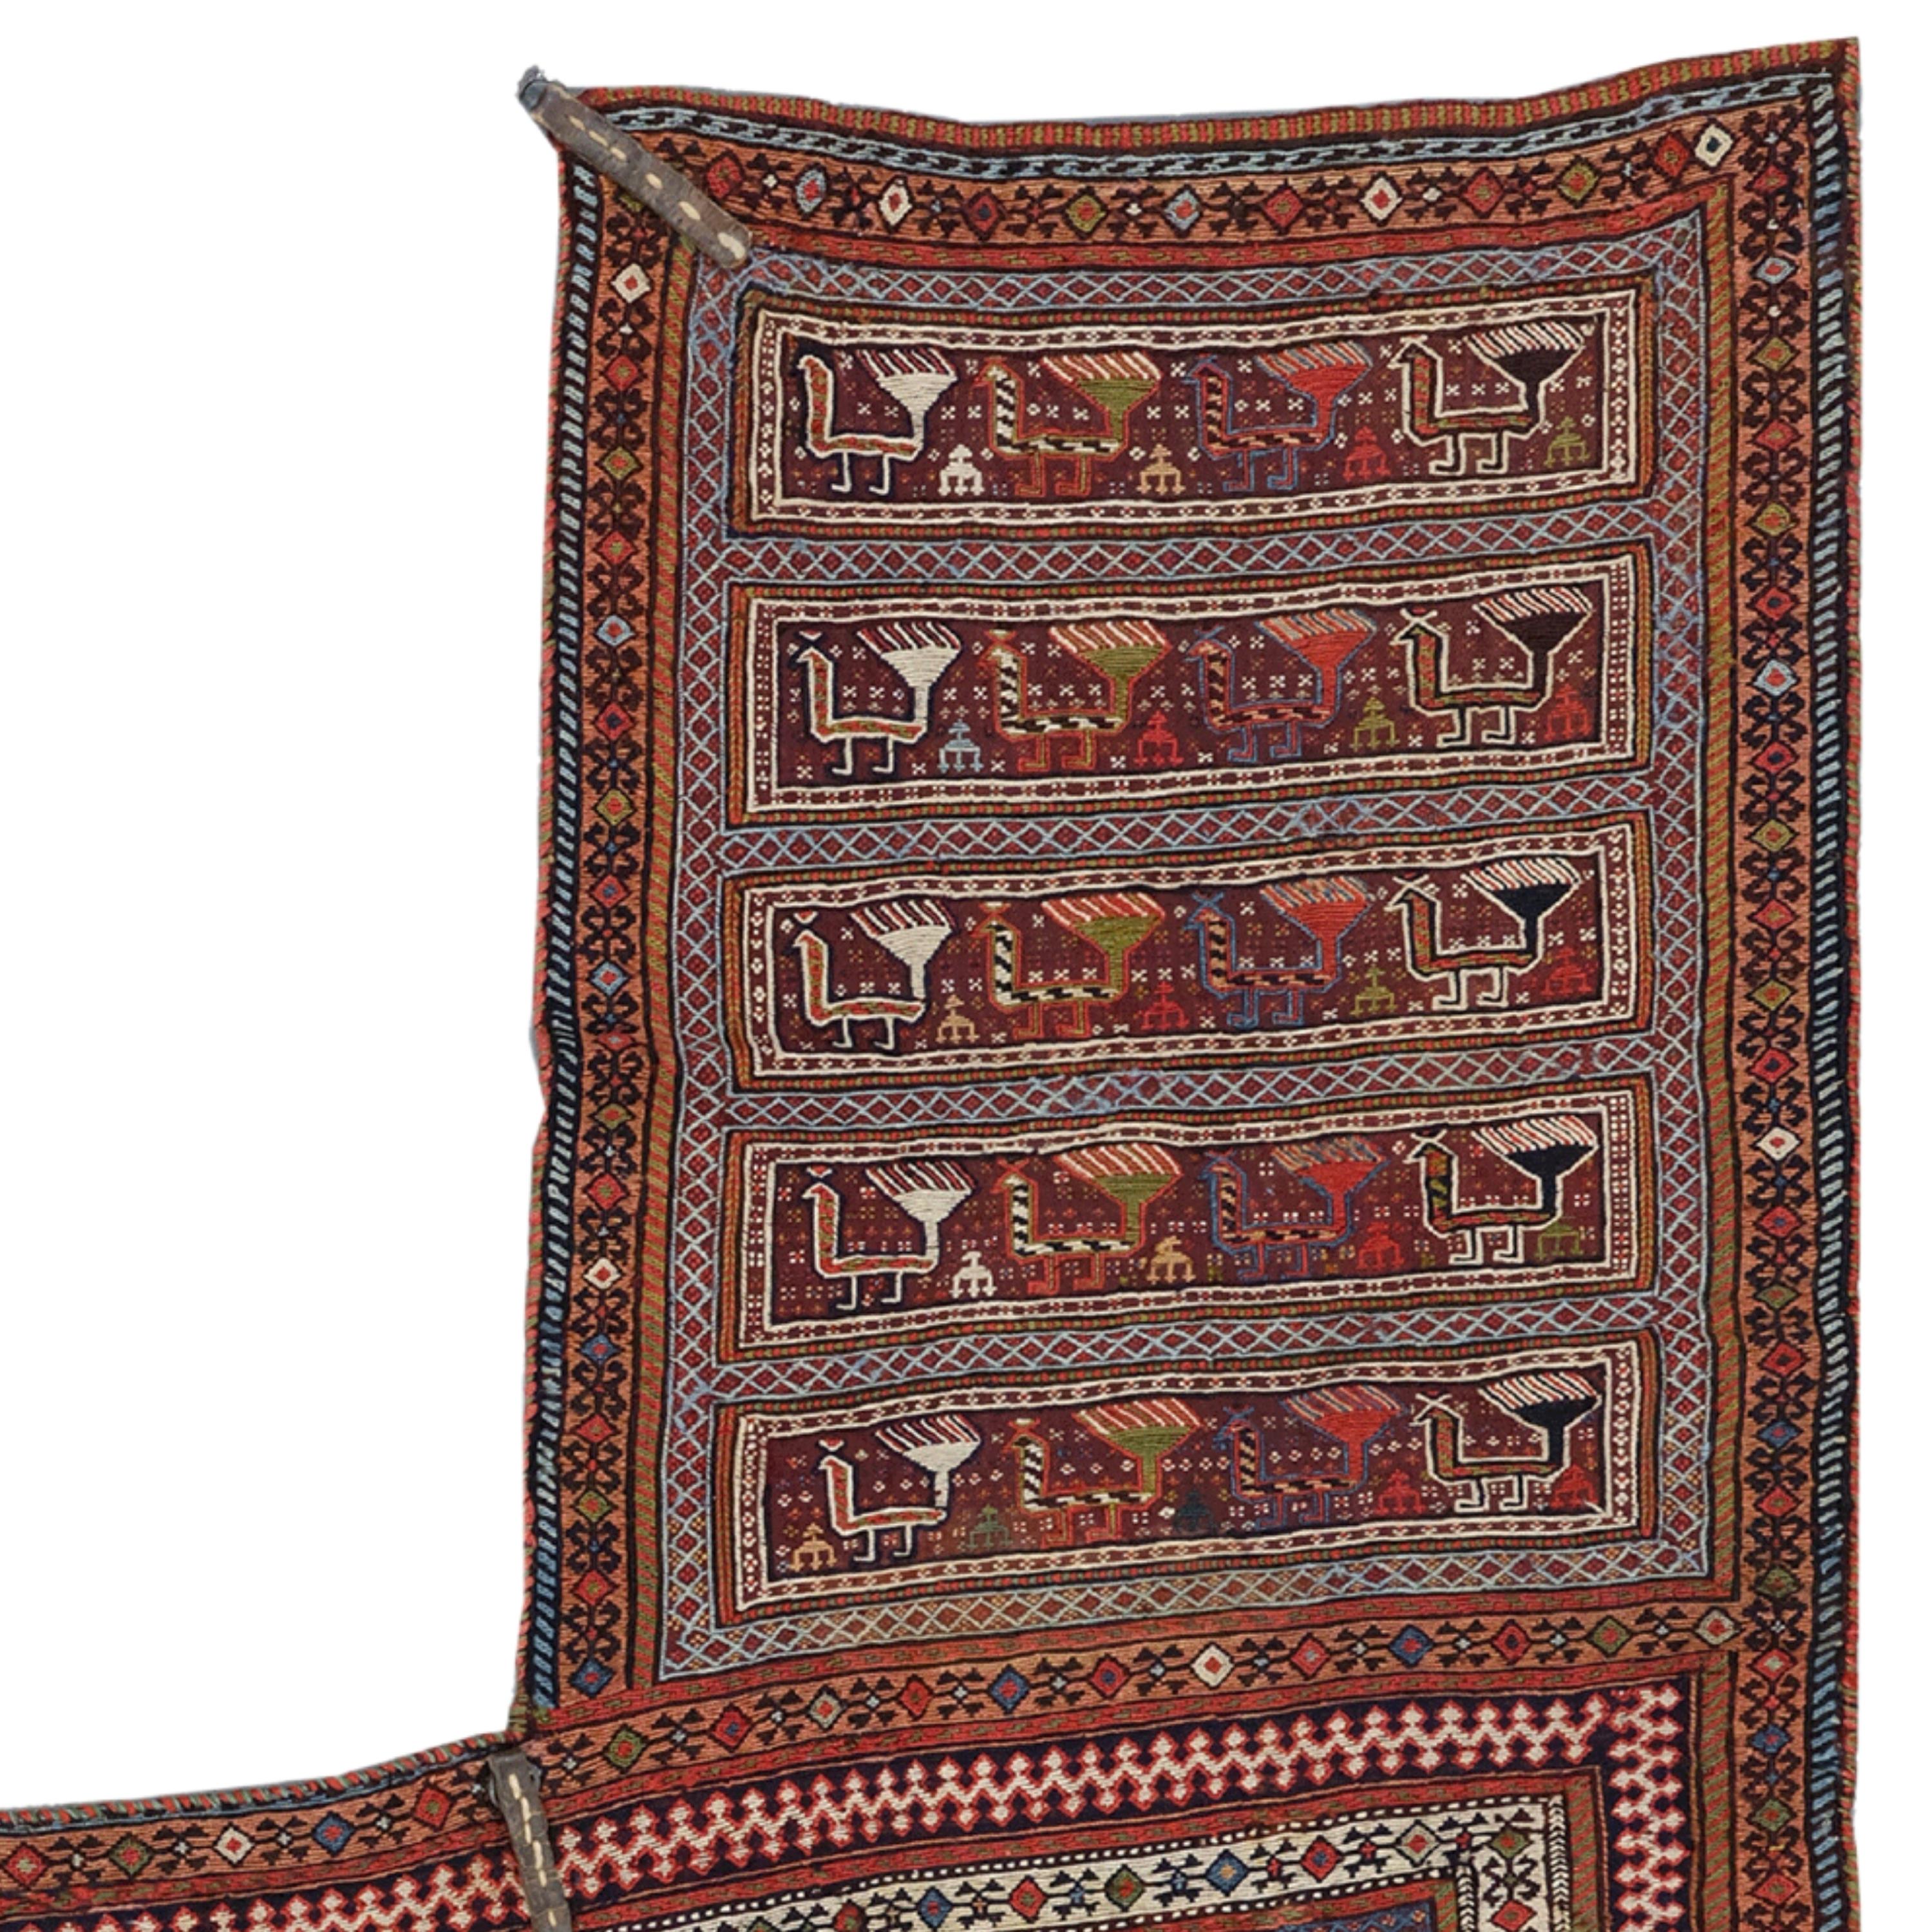 Antique Qashqai Horse Cover, Antique Rug, Antique Horse Cover In Good Condition For Sale In Sultanahmet, 34